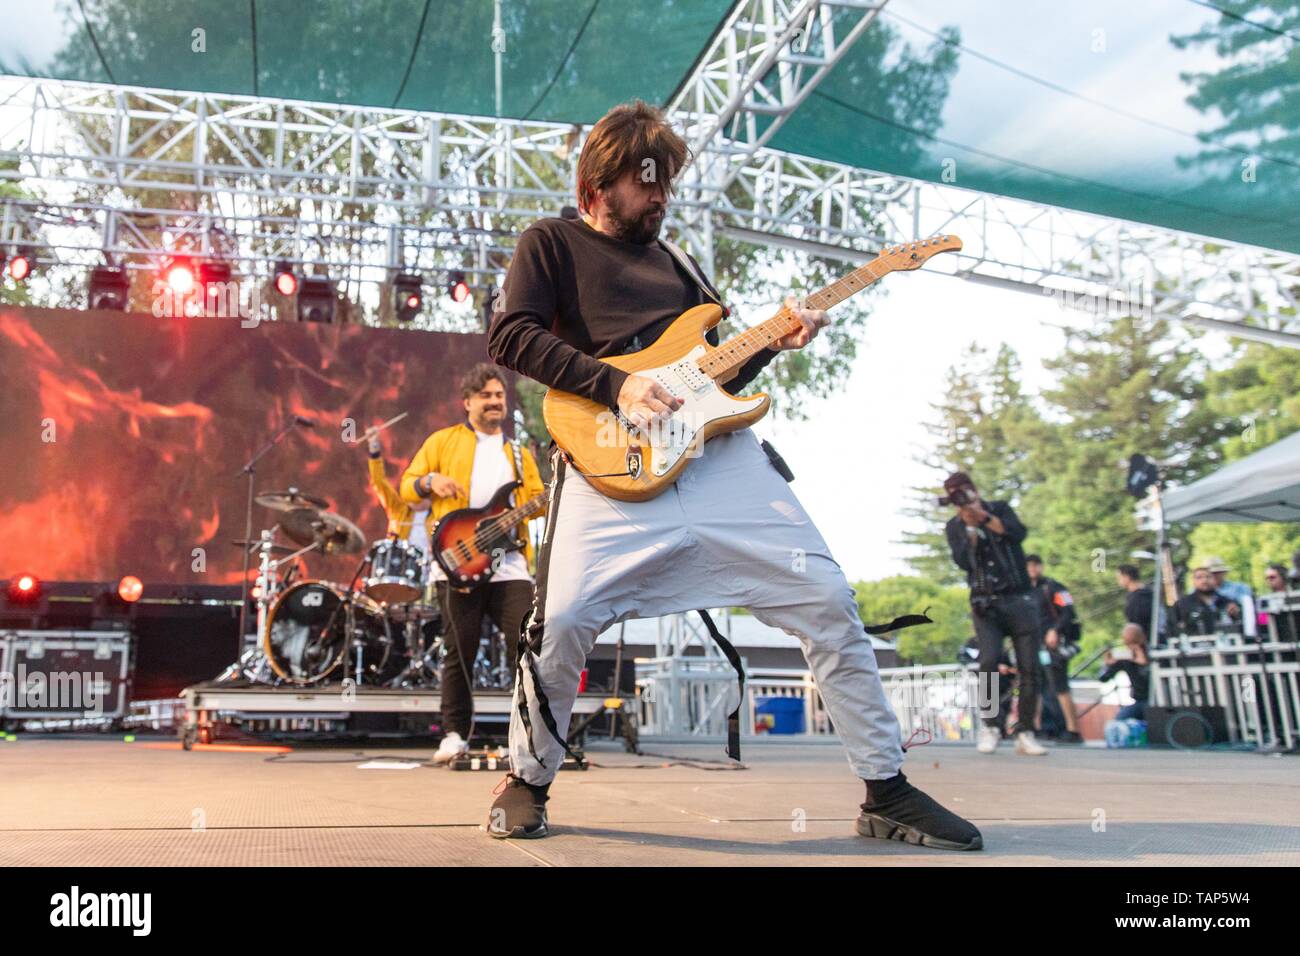 May 25, 2019 - Napa, California, U.S - Latin musician JUANES (JUAN ESTEBAN ARISTIZABAL VASQUEZ) during the BottleRock Music Festival in Napa, California (Credit Image: © Daniel DeSlover/ZUMA Wire) Stock Photo